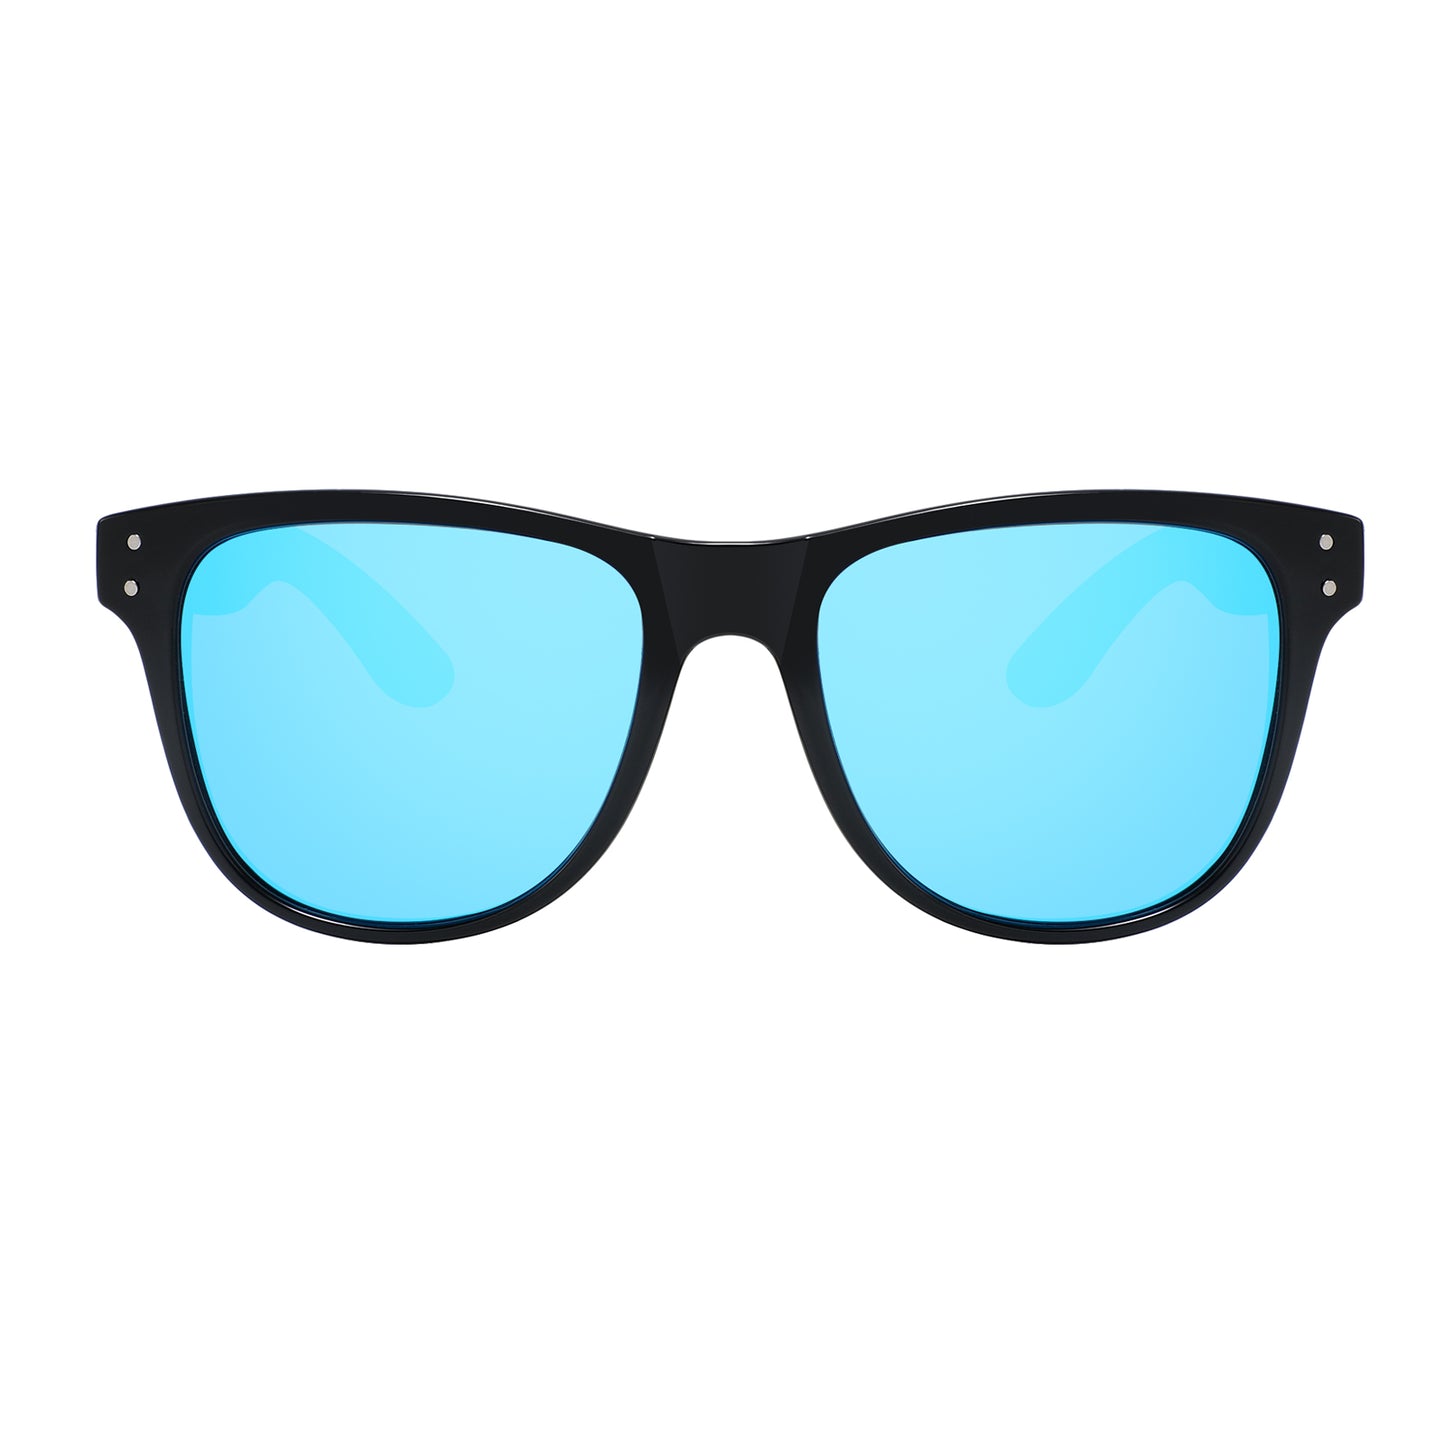 LEXI BLUE Ladies Sunglasses Polarised Lens Wooden Arms